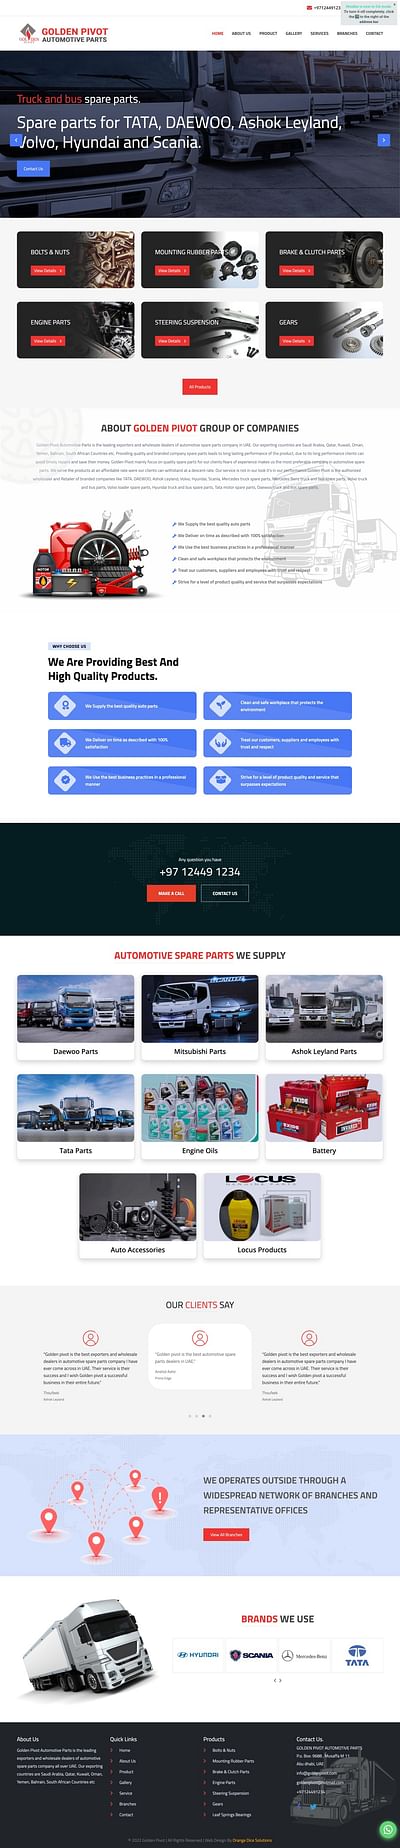 Website designed for Goldenpivot automobile - Web Application